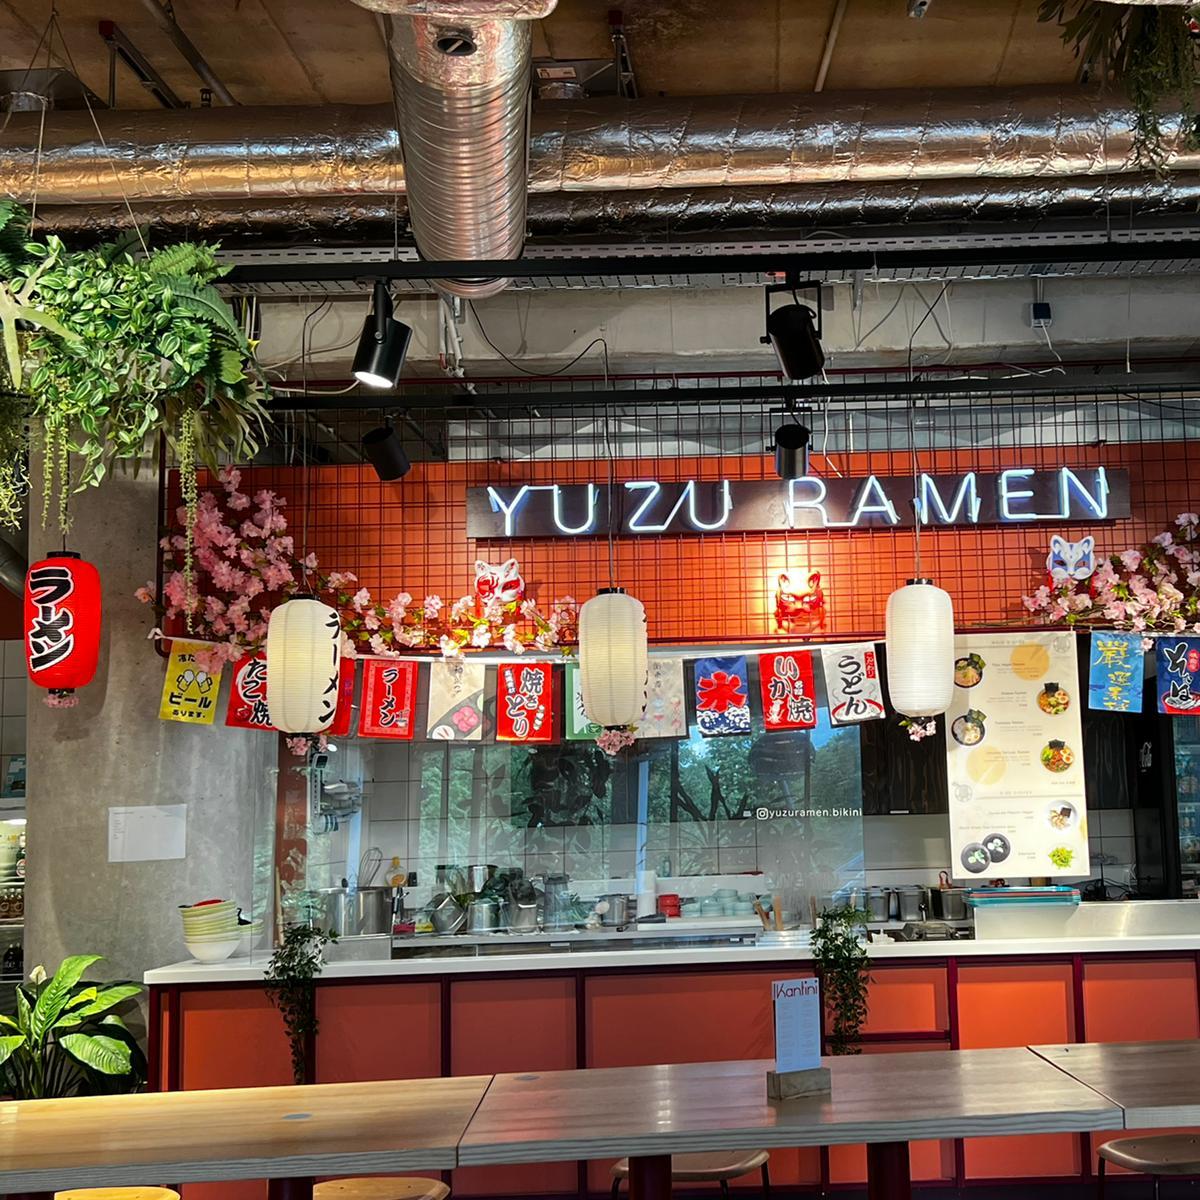 Restaurant "Yuzu Ramen Berlin" in Berlin